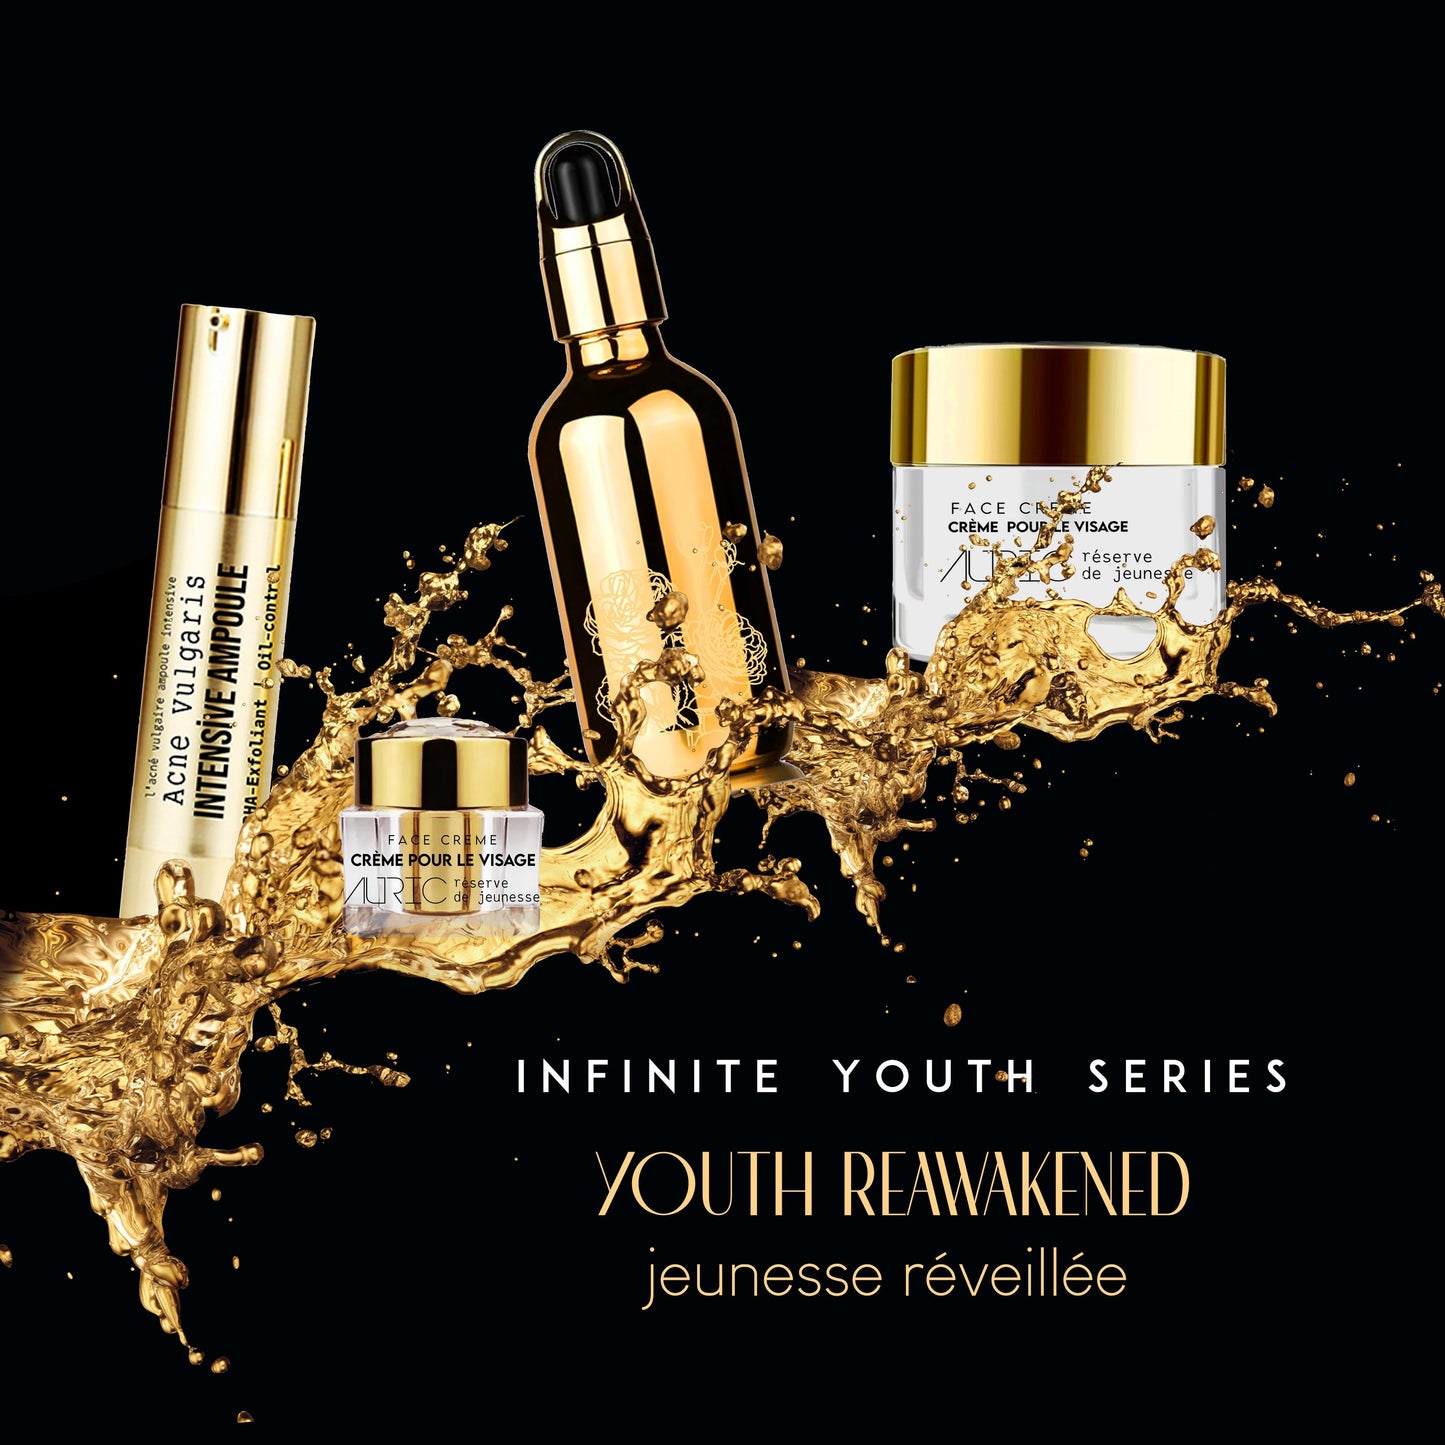 [Esthétique Renaissance] AURIC Infinite Youth Series Anti-aging Face Serum (Gold) 30ml